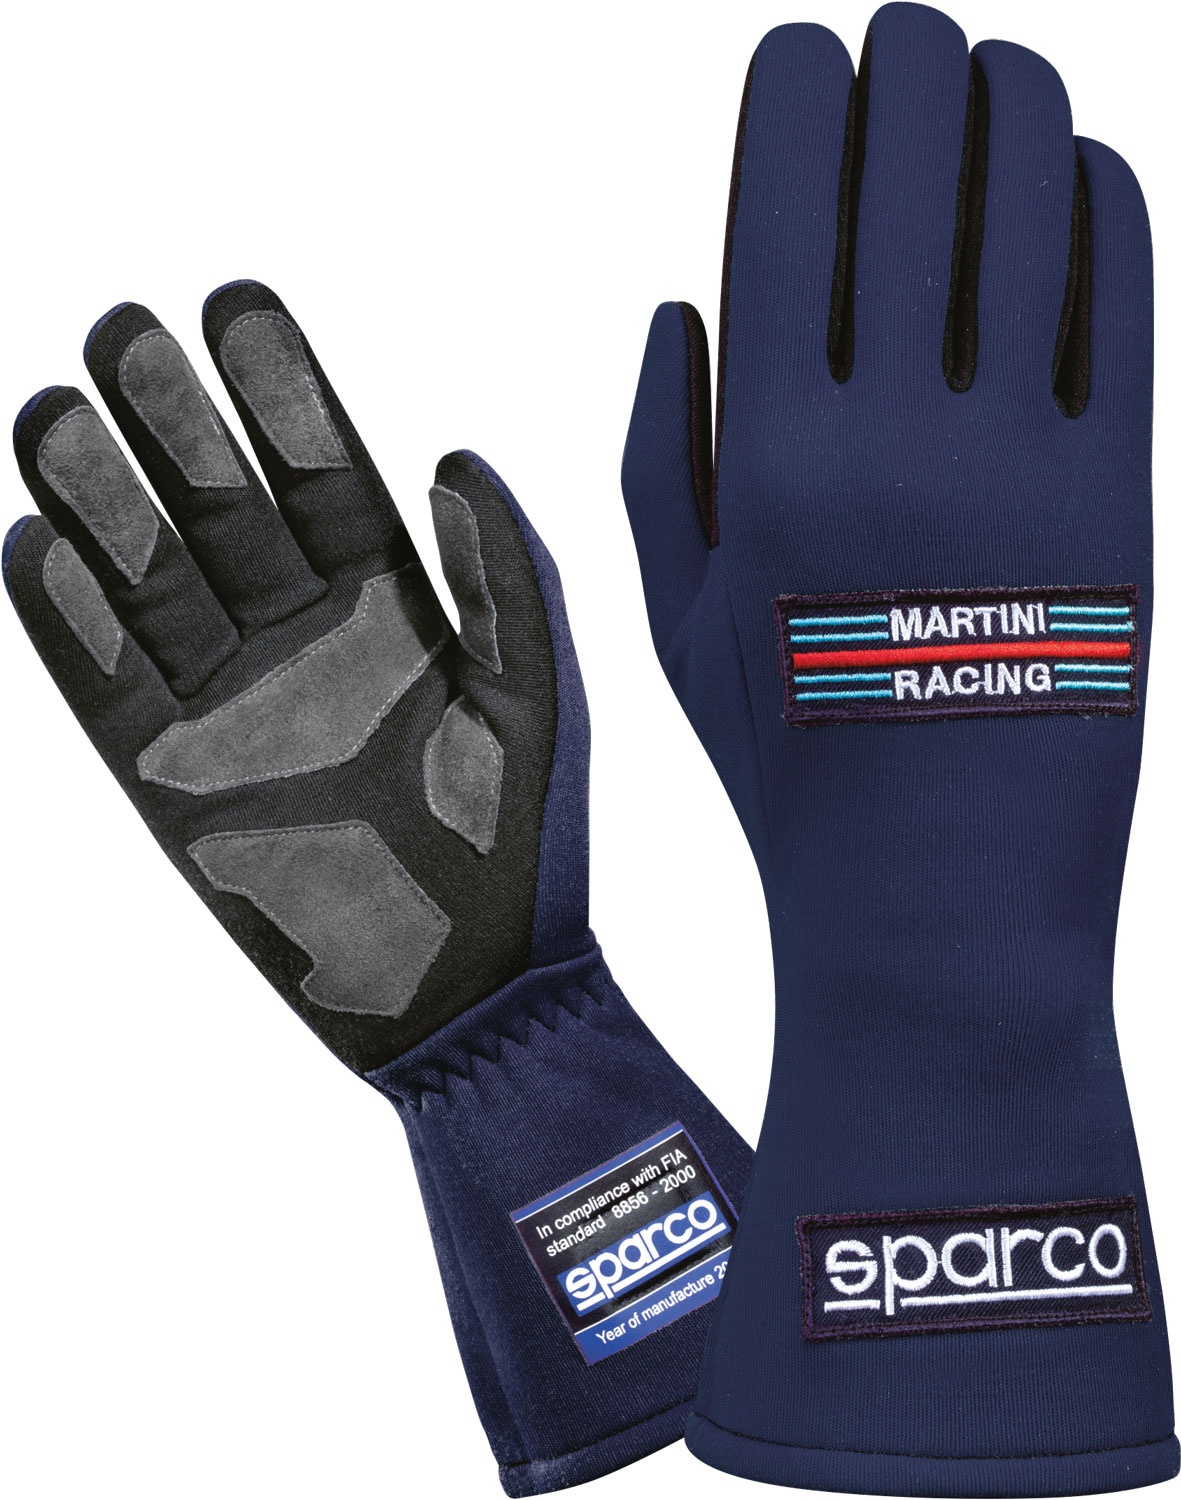 Sparco Handschuh Martini Racing, dunkelblau